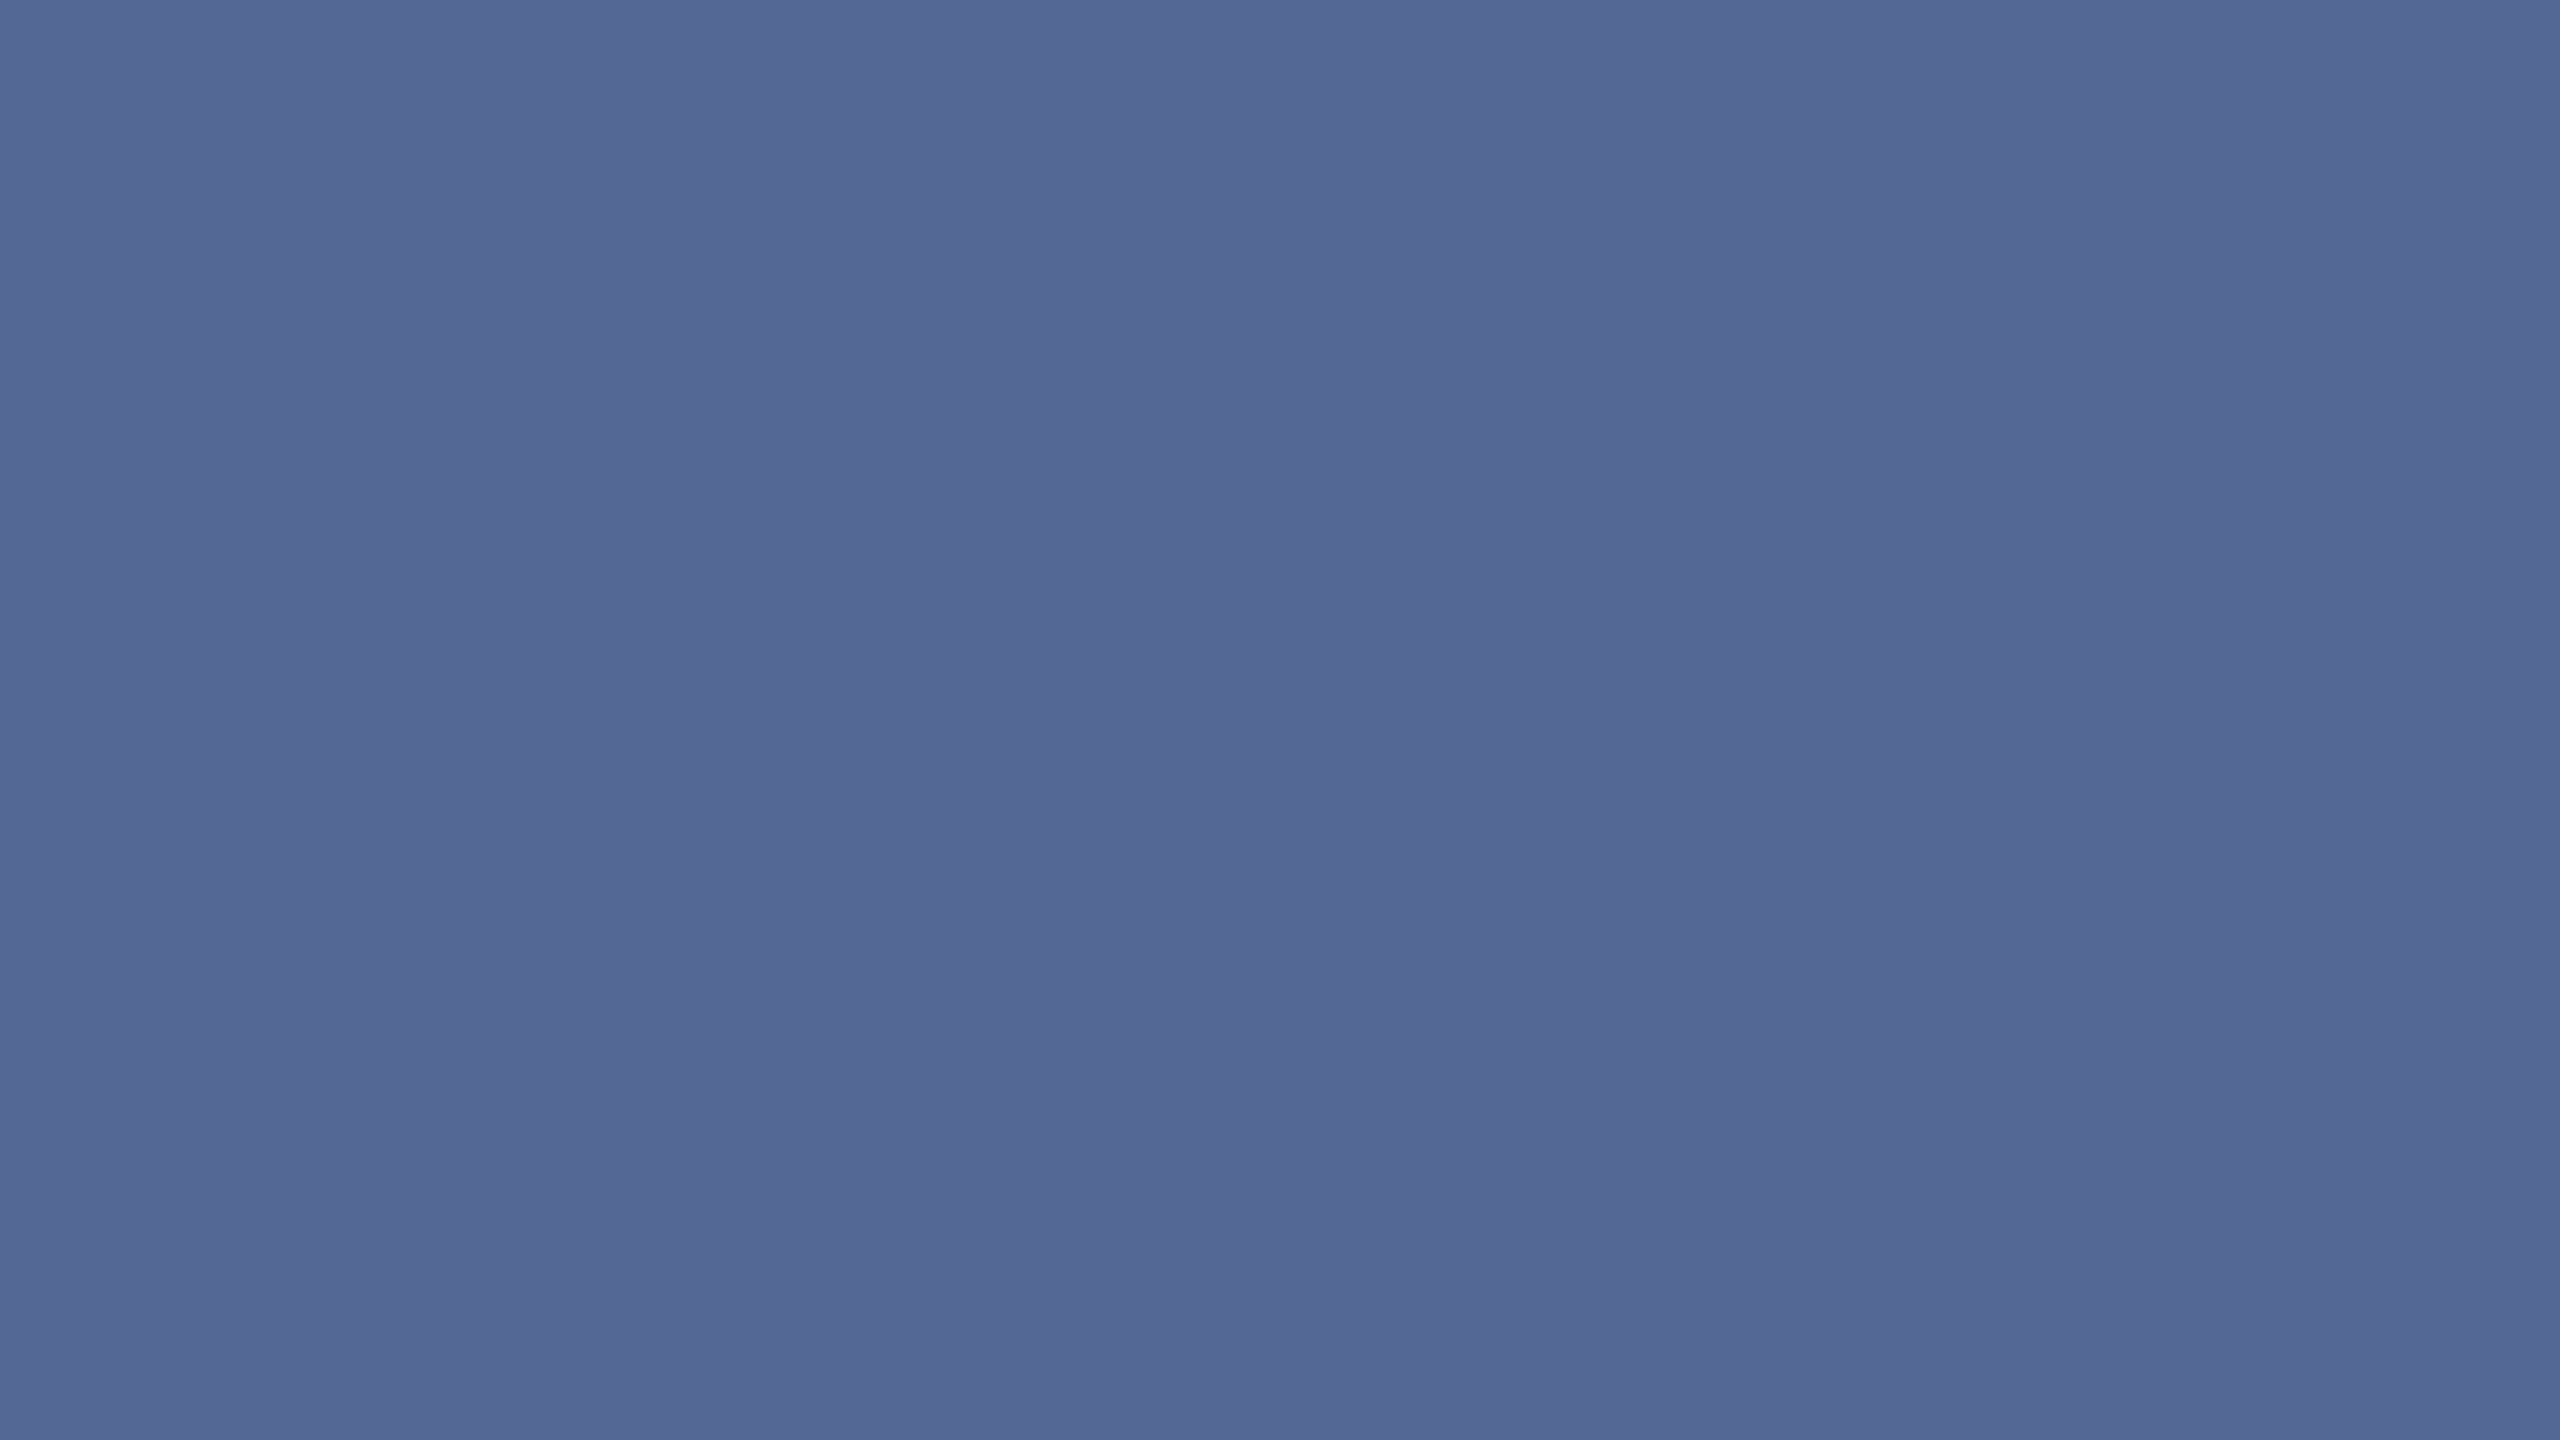 2560x1440 UCLA Blue Solid Color Background